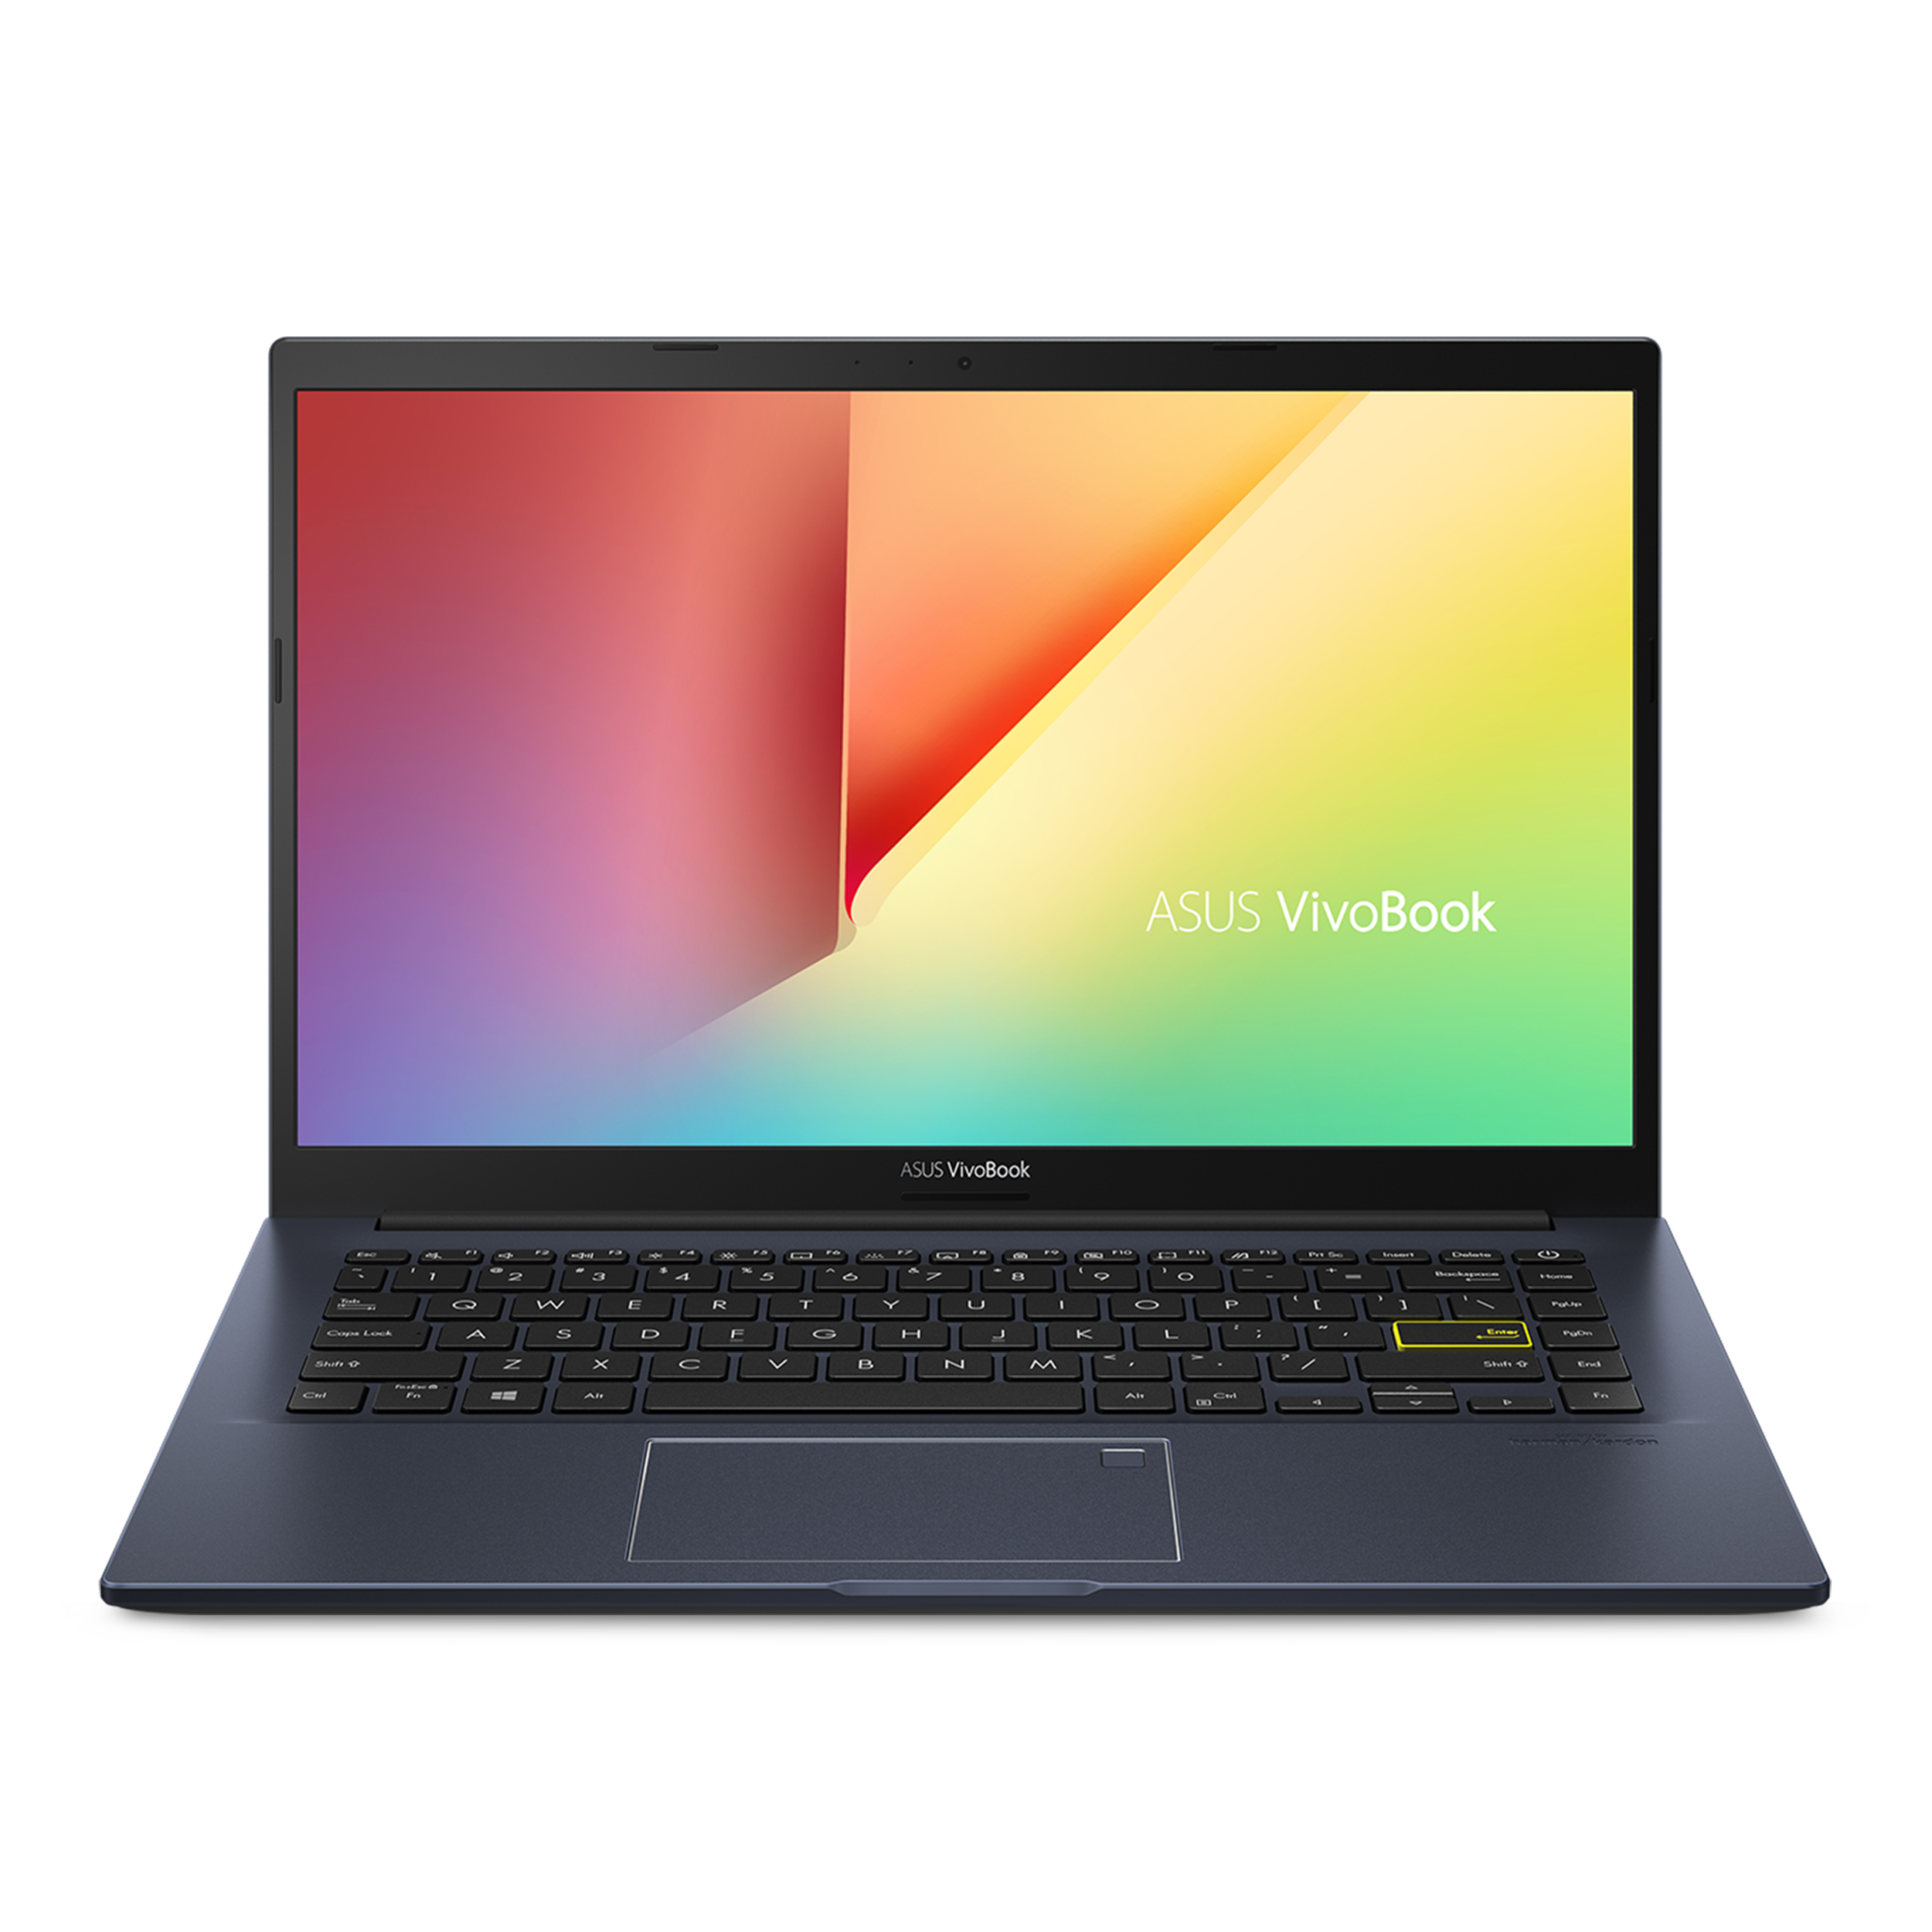 Asus VivoBook 14 Premium Thin and Light Laptop 14” FHD Display AMD 4-Core Ryzen 5 3500U 8GB DDR4 256GB SSD Backlit Keyboard Fingerprint USB-C HDMI Wifi6 Harman Win10 - image 2 of 6